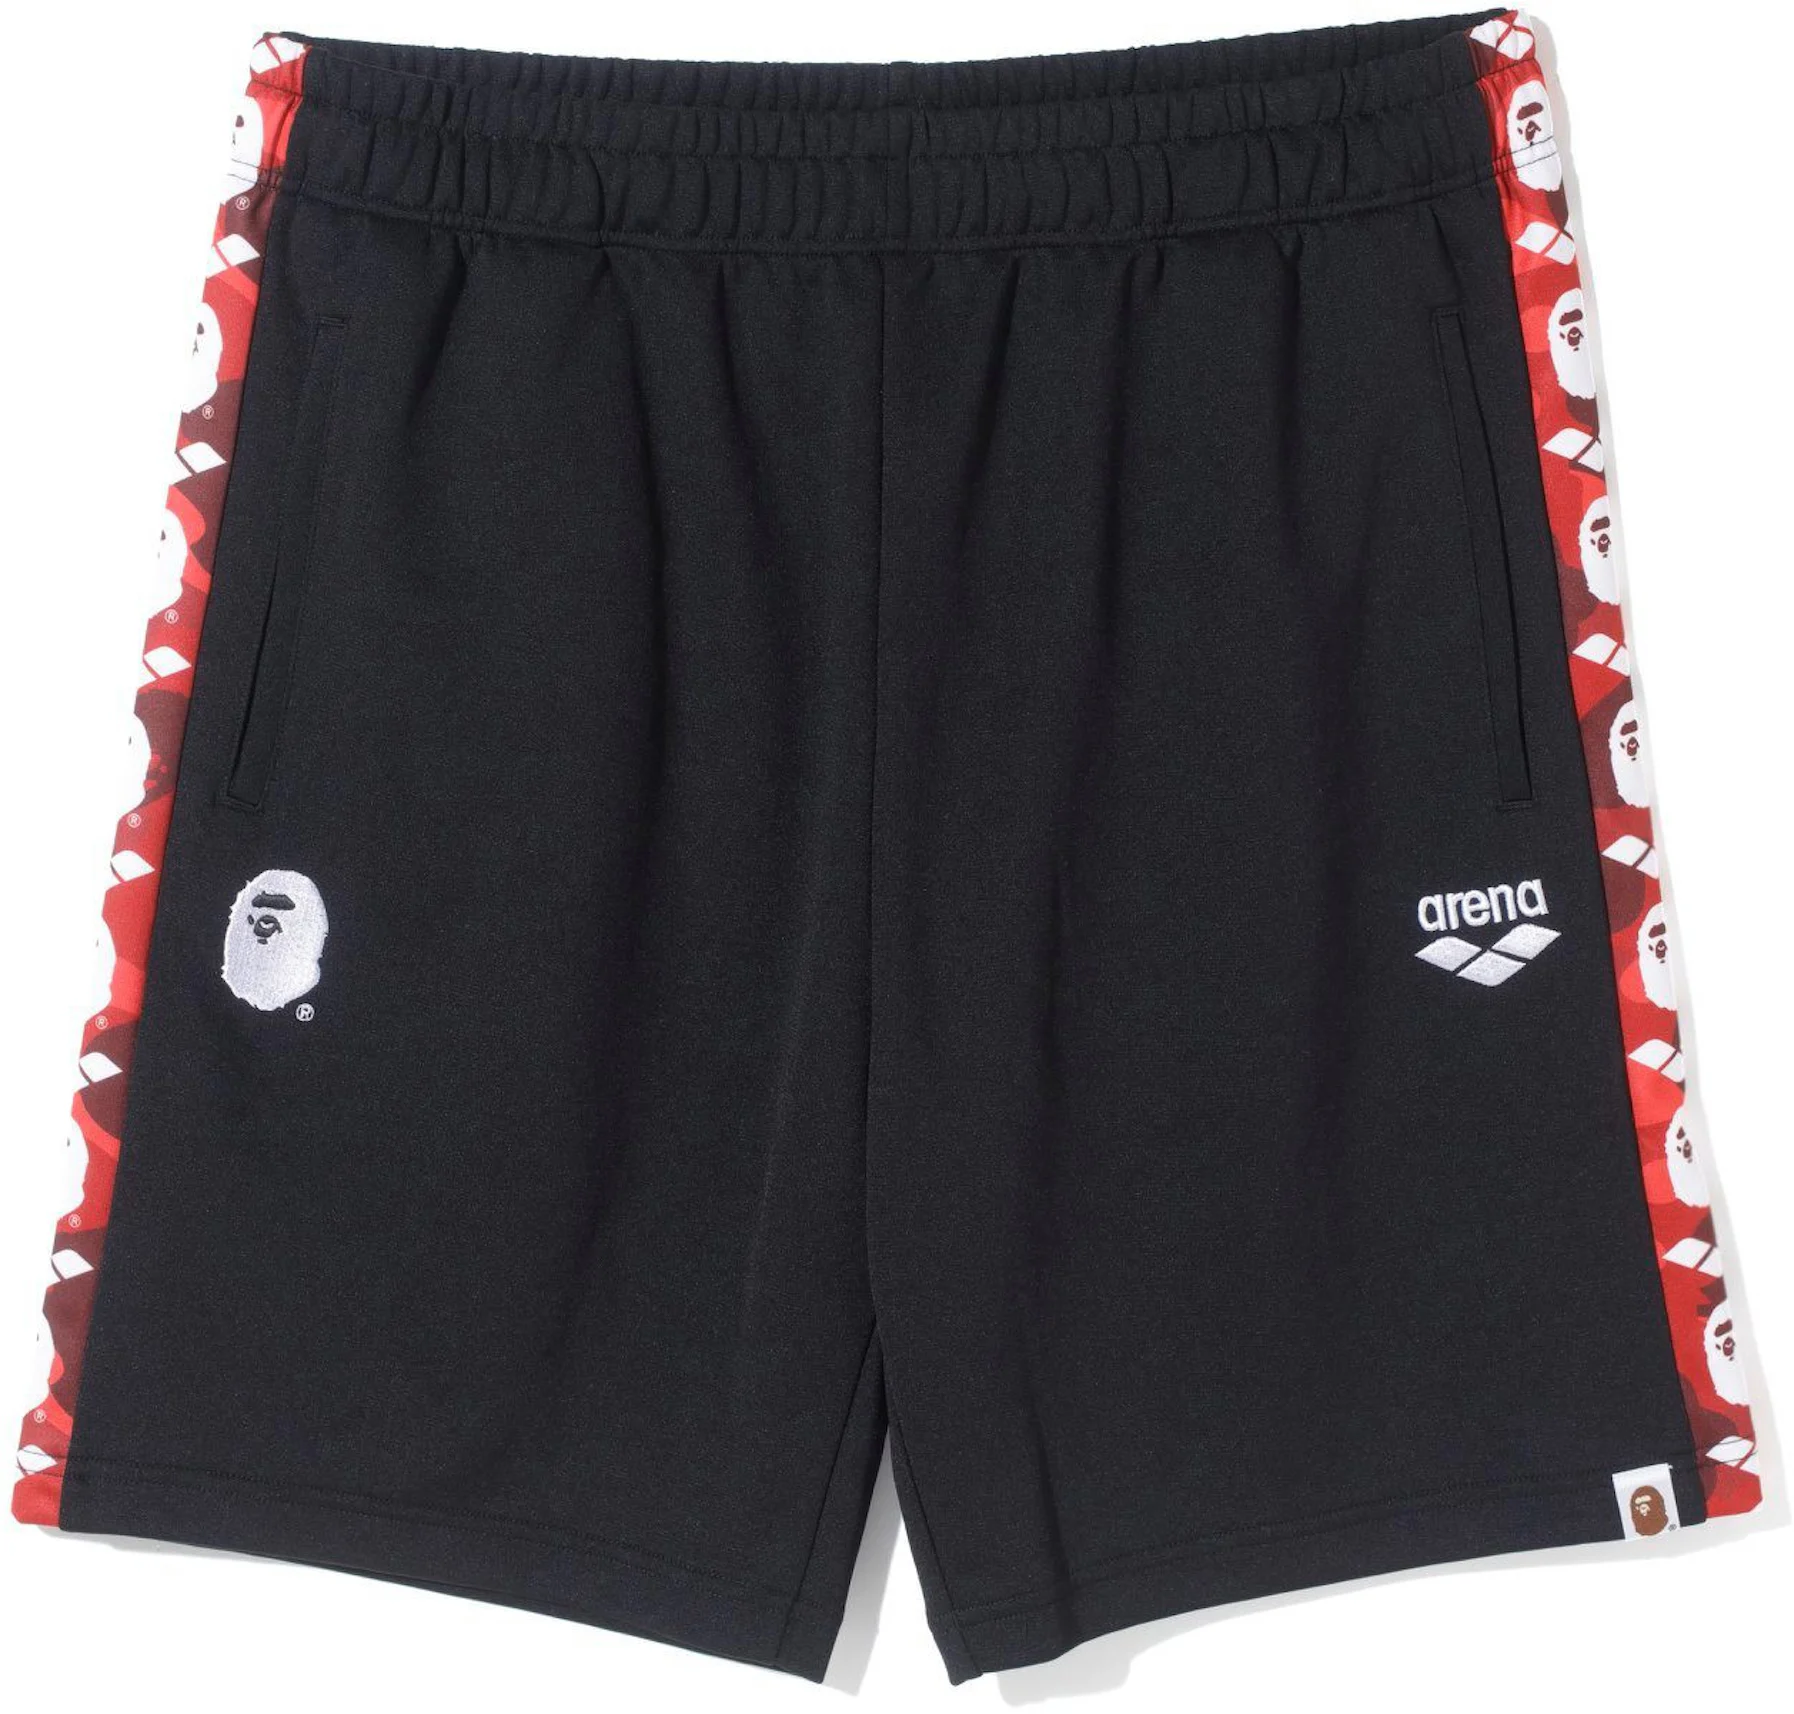 BAPE x Arena Jersey Shorts Black